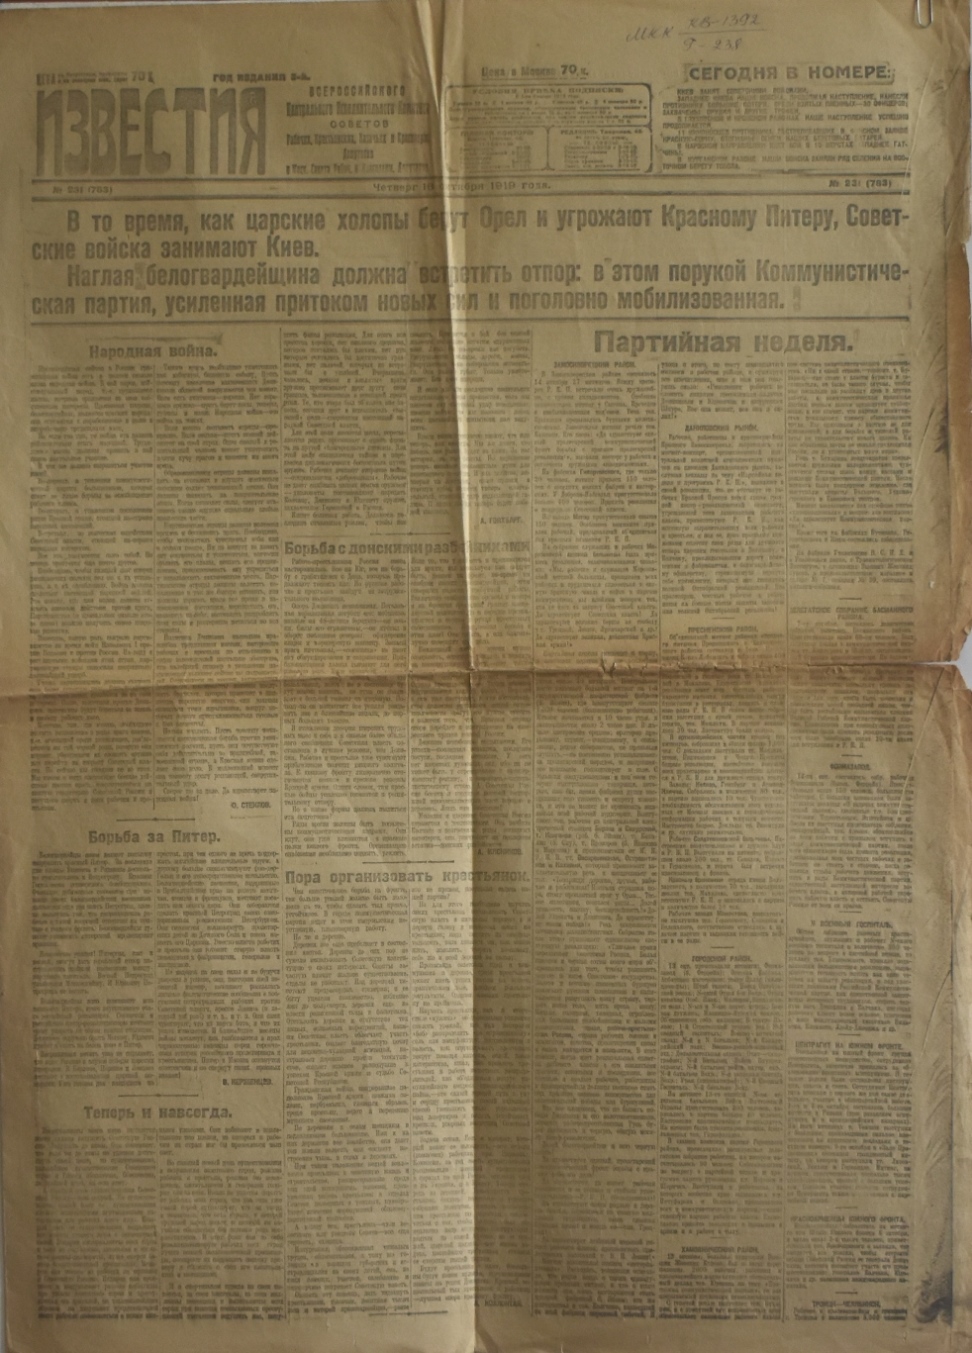 Газета "Известия" № 231 (783), четвер 16 жовтня 1919 року